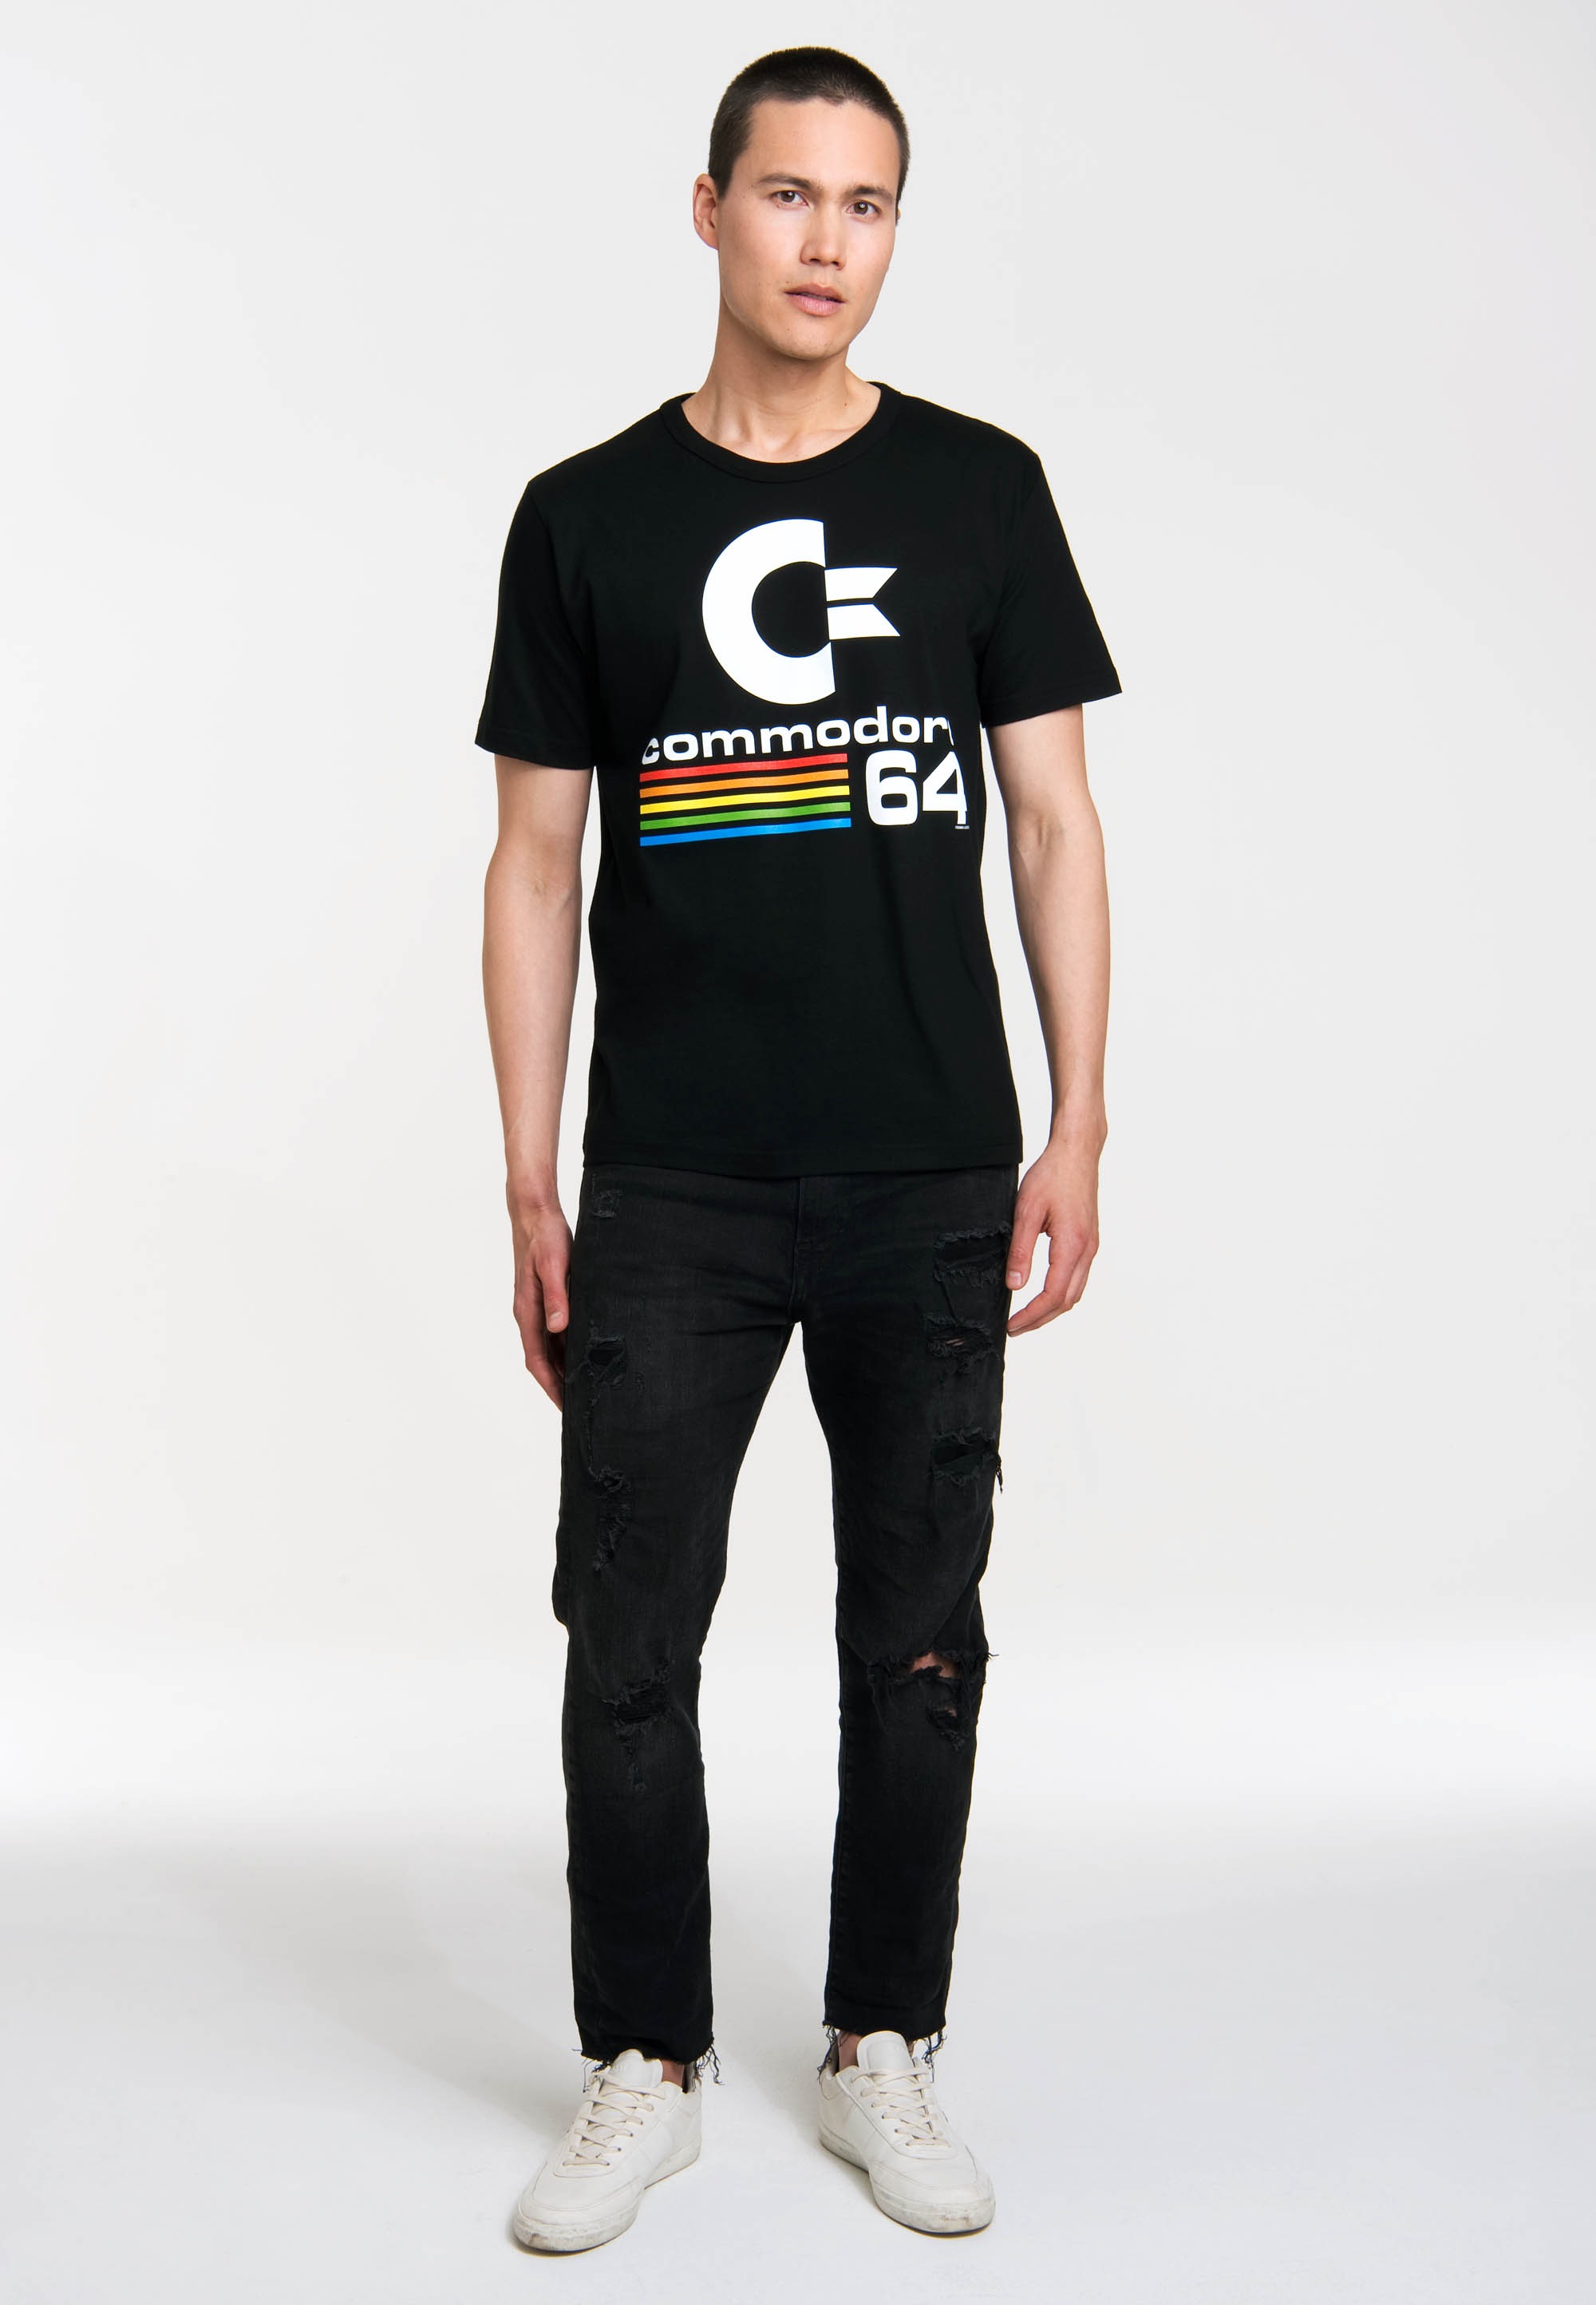 LOGOSHIRT T-Shirt "Commodore C64 Logo" 2